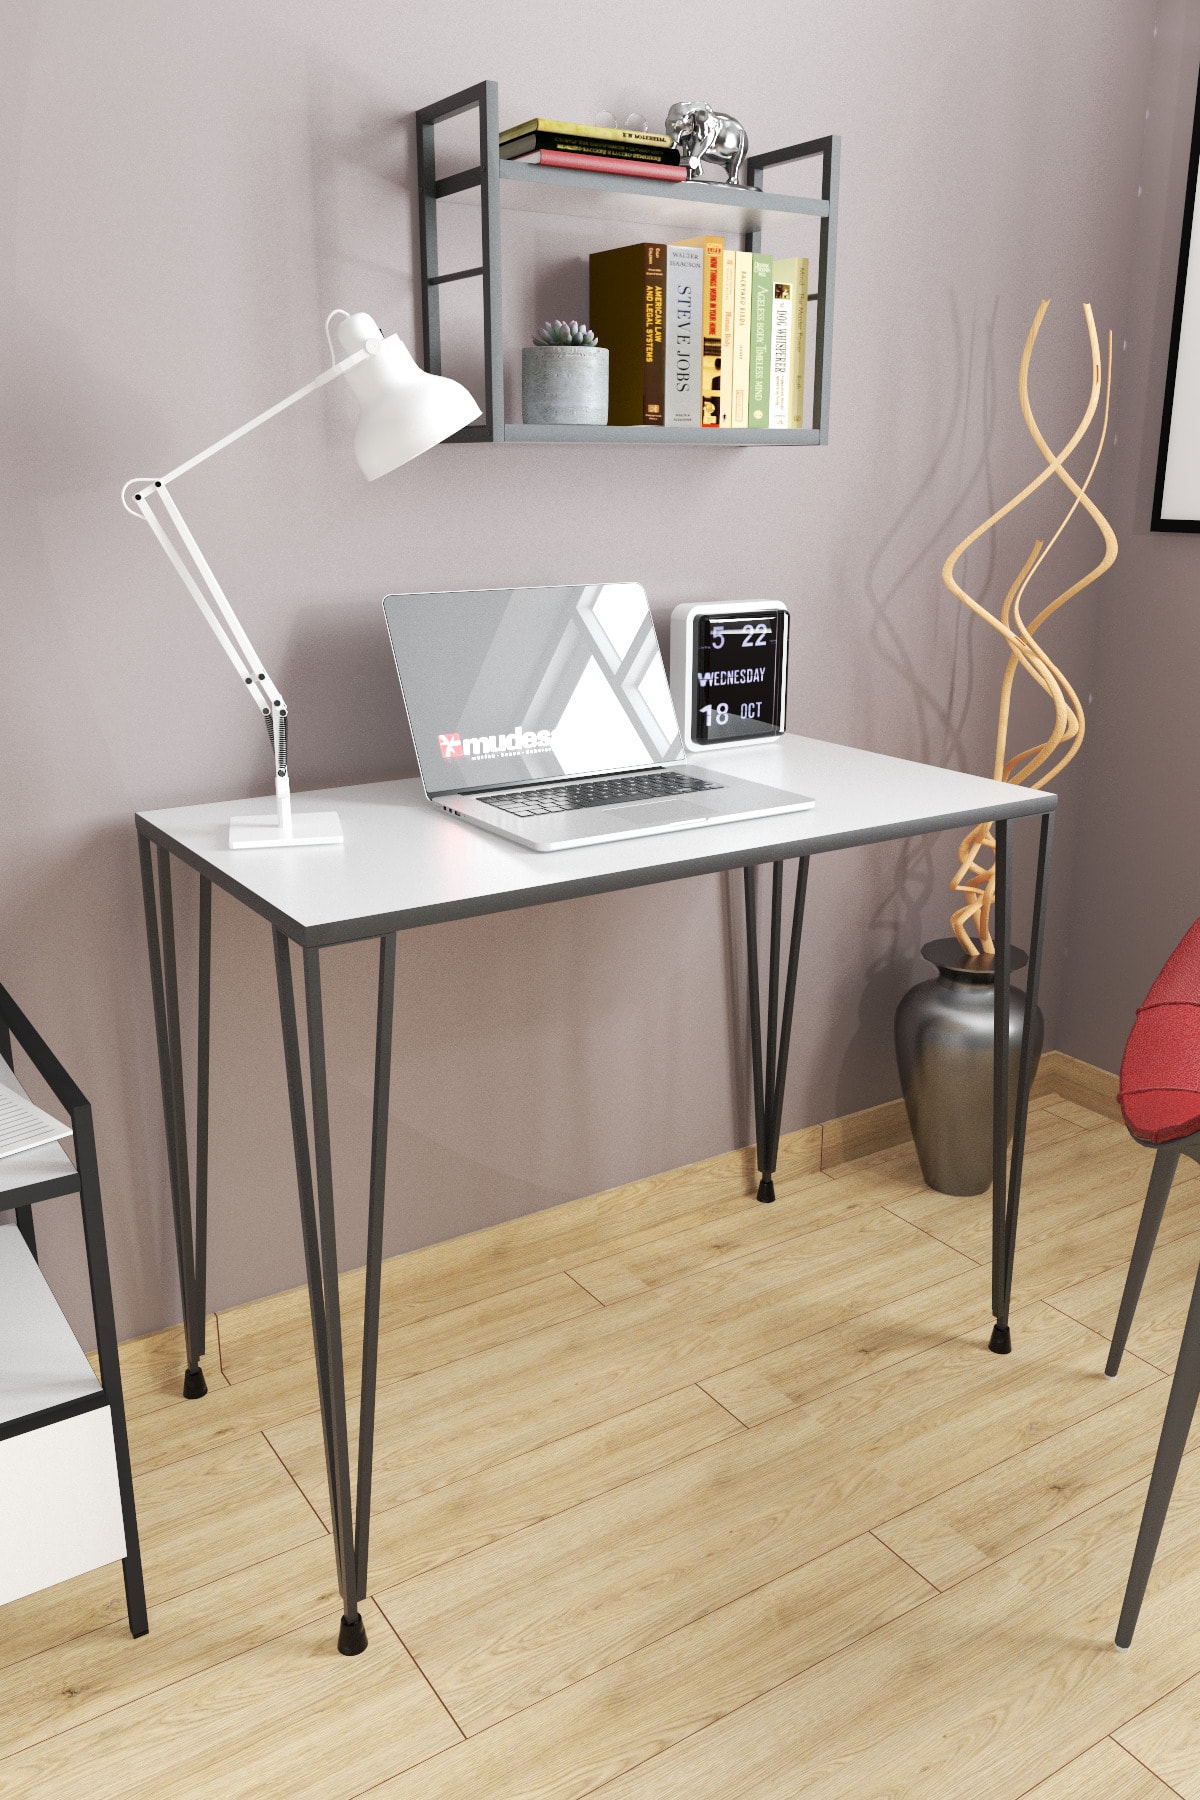 Mudesa Çalışma Masası Mini Ofis Masası Metal Ayaklı Dekoratif Masa Ders Çalışma Masası Genç Odası Masası